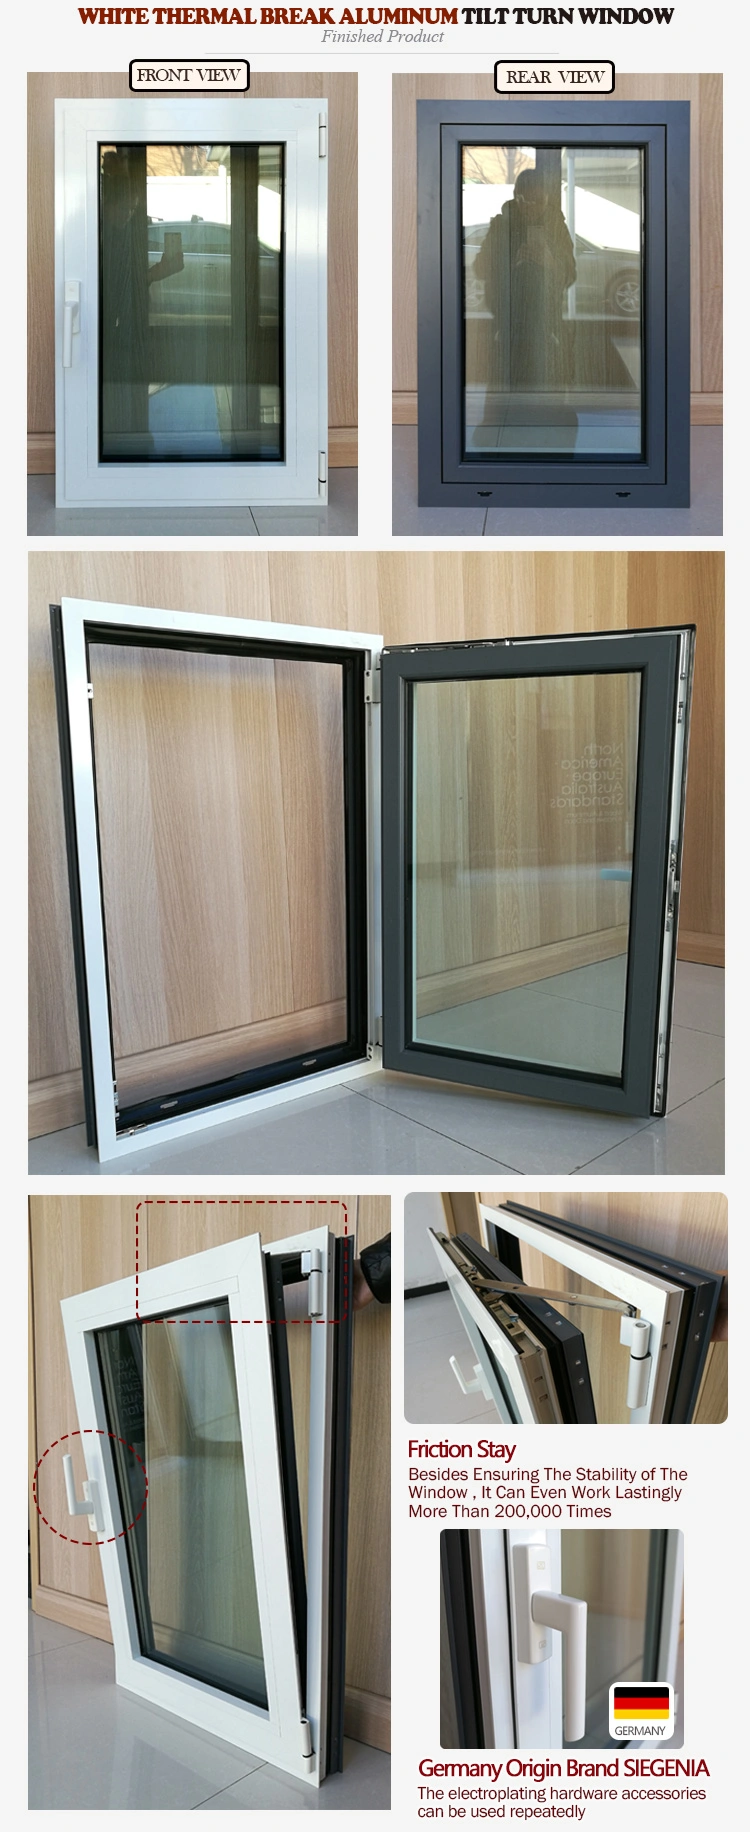 China Window Manufacture Sample Free Thermal Break Aluminum Casement Tilt Turn Two Opening Ways Windows